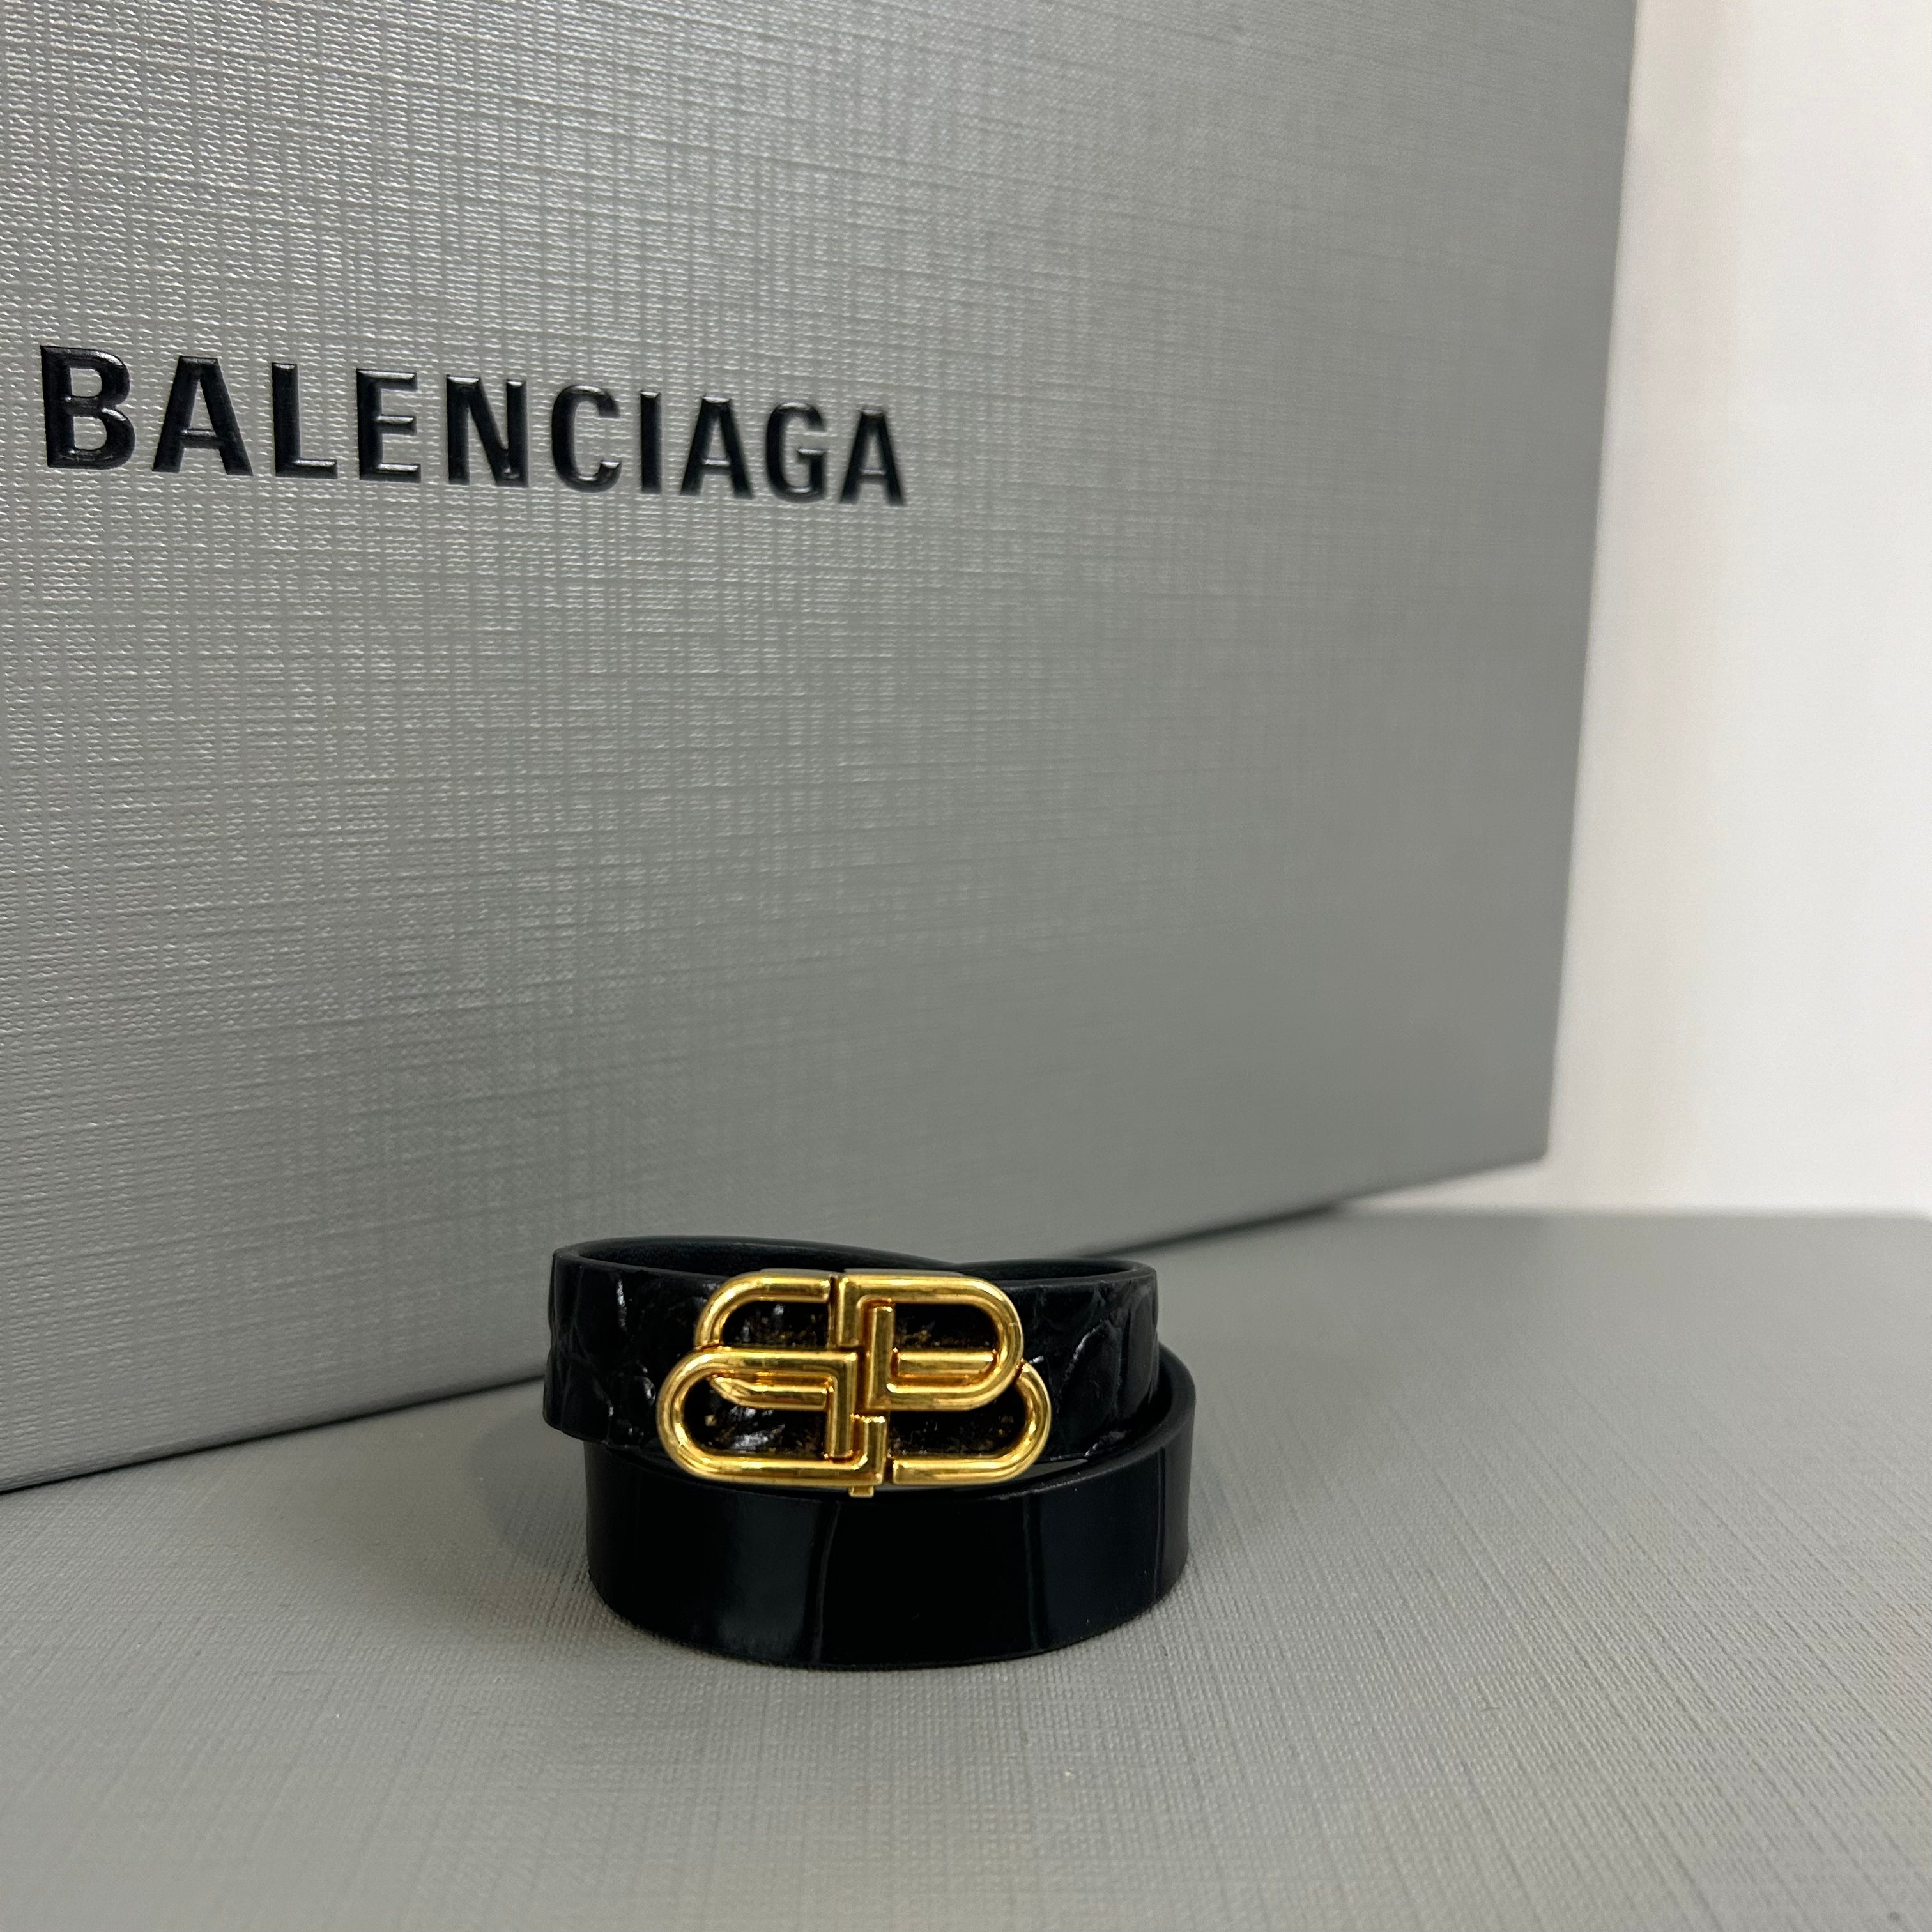 Balenciaga - Bracelet Double Tour